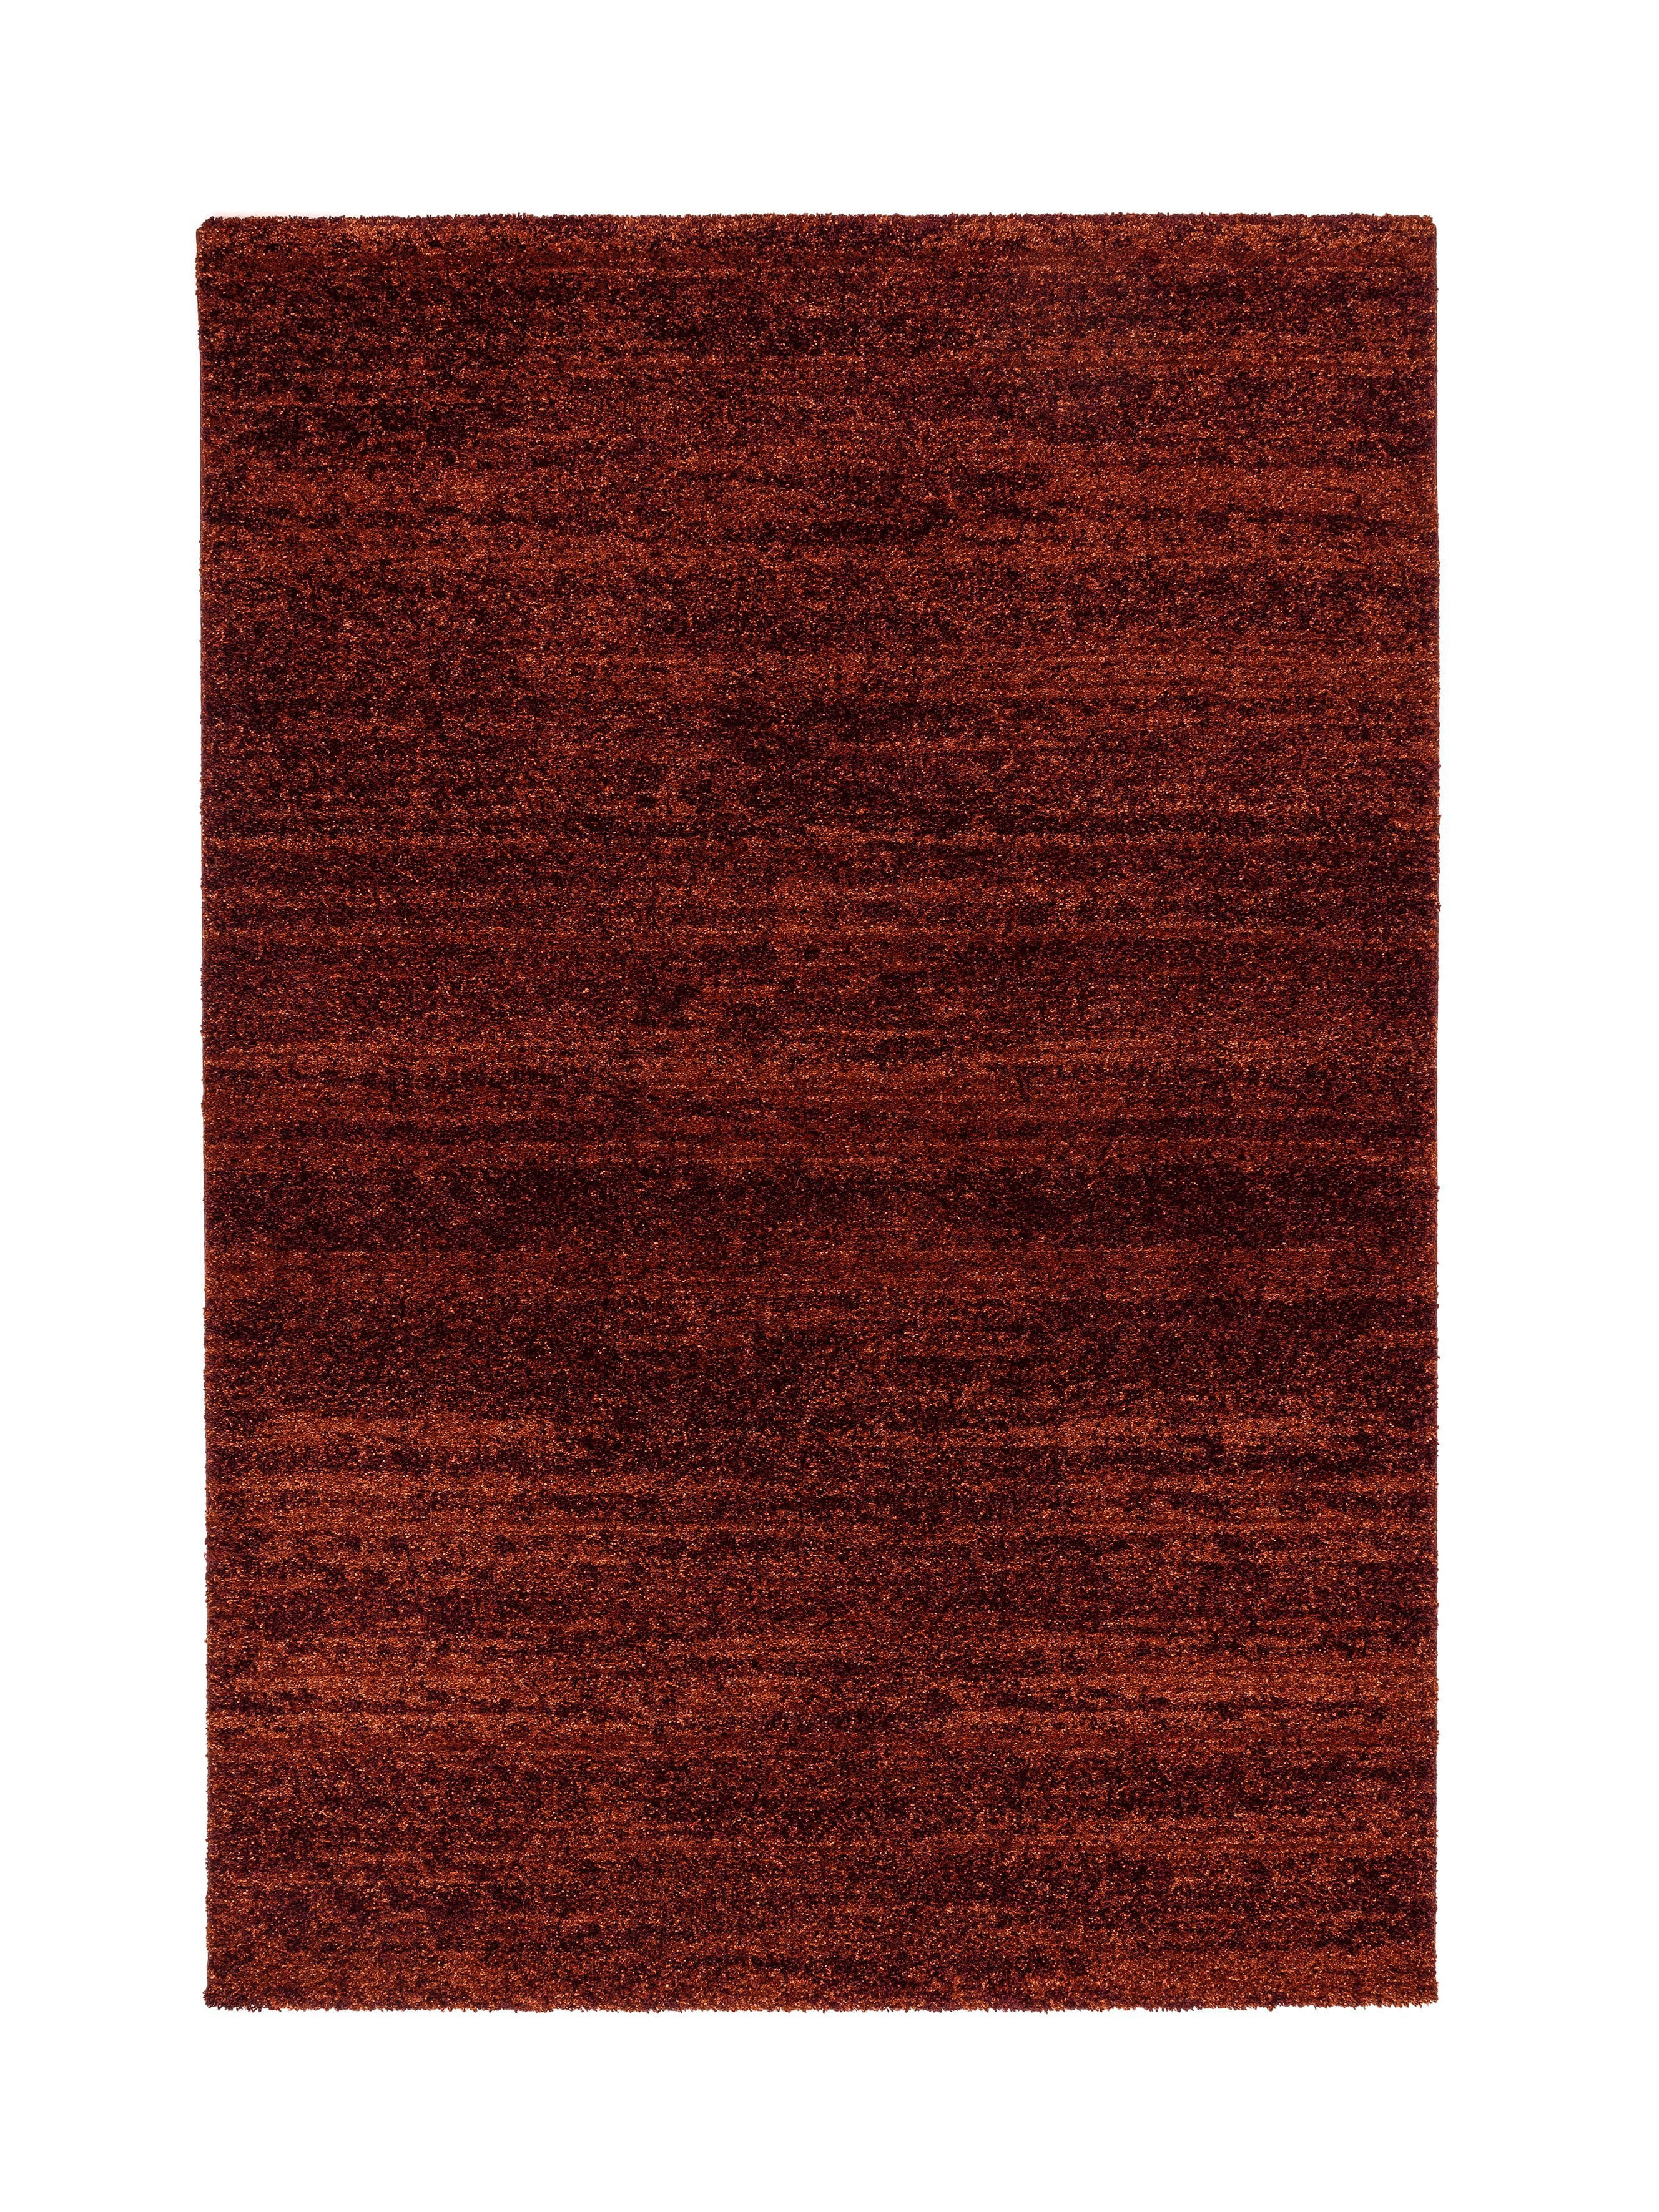 HOCHFLORTEPPICH 200/290 cm  - Rot, Basics, Textil (200/290cm) - Novel